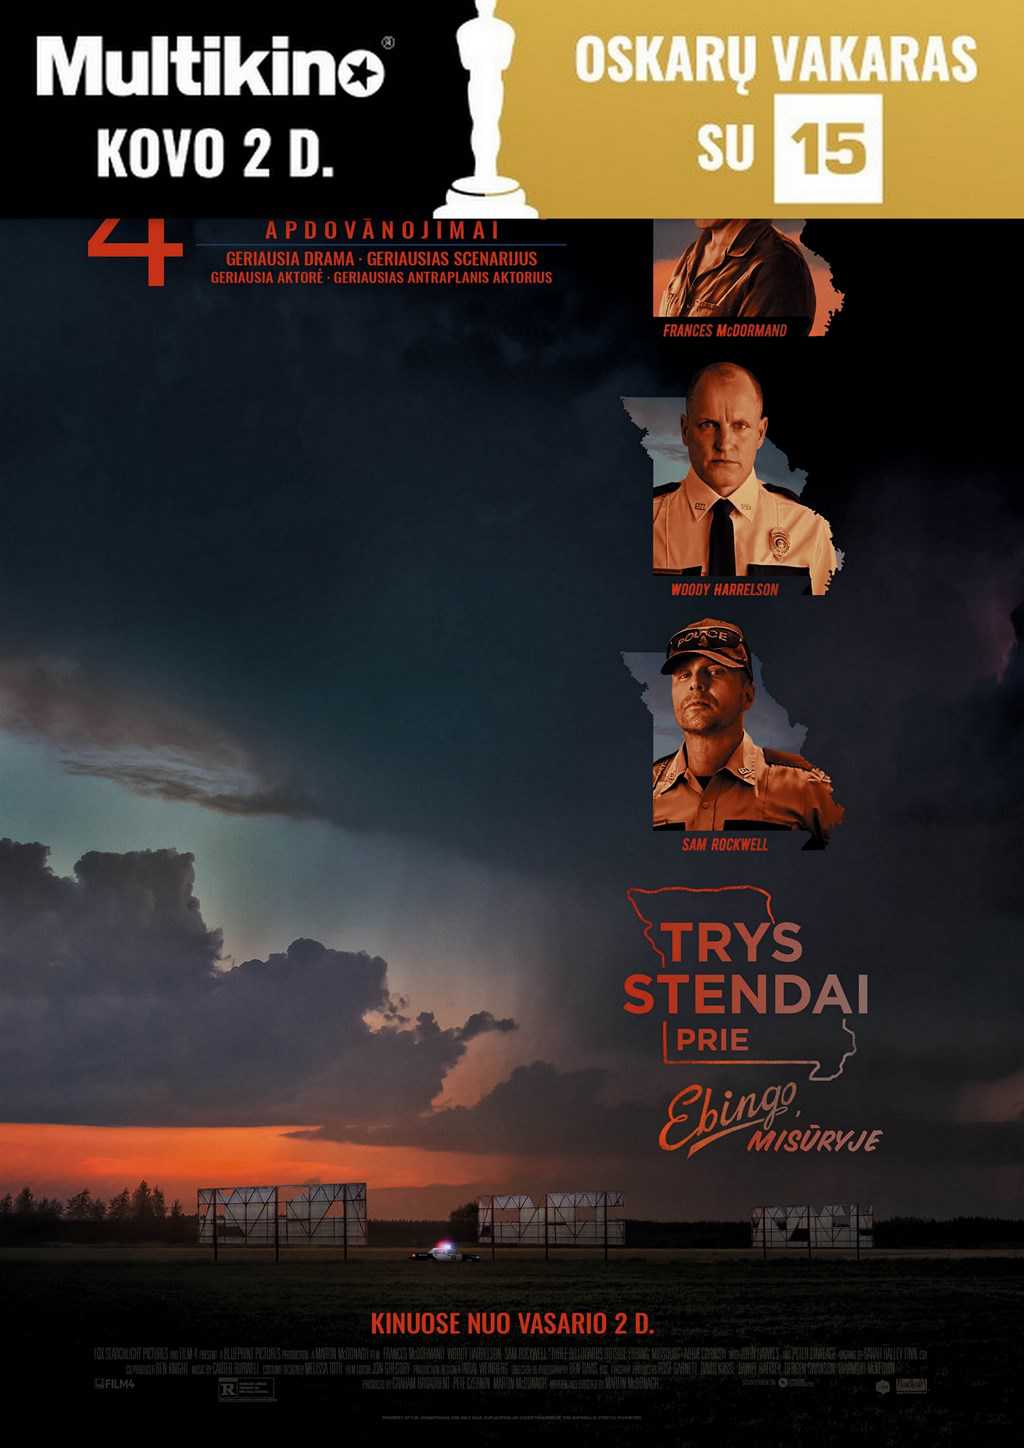 Oskarų vakaras : Trys stendai prie ebingo, misūryje (Three Billboards Outside Ebbing, Missouri)